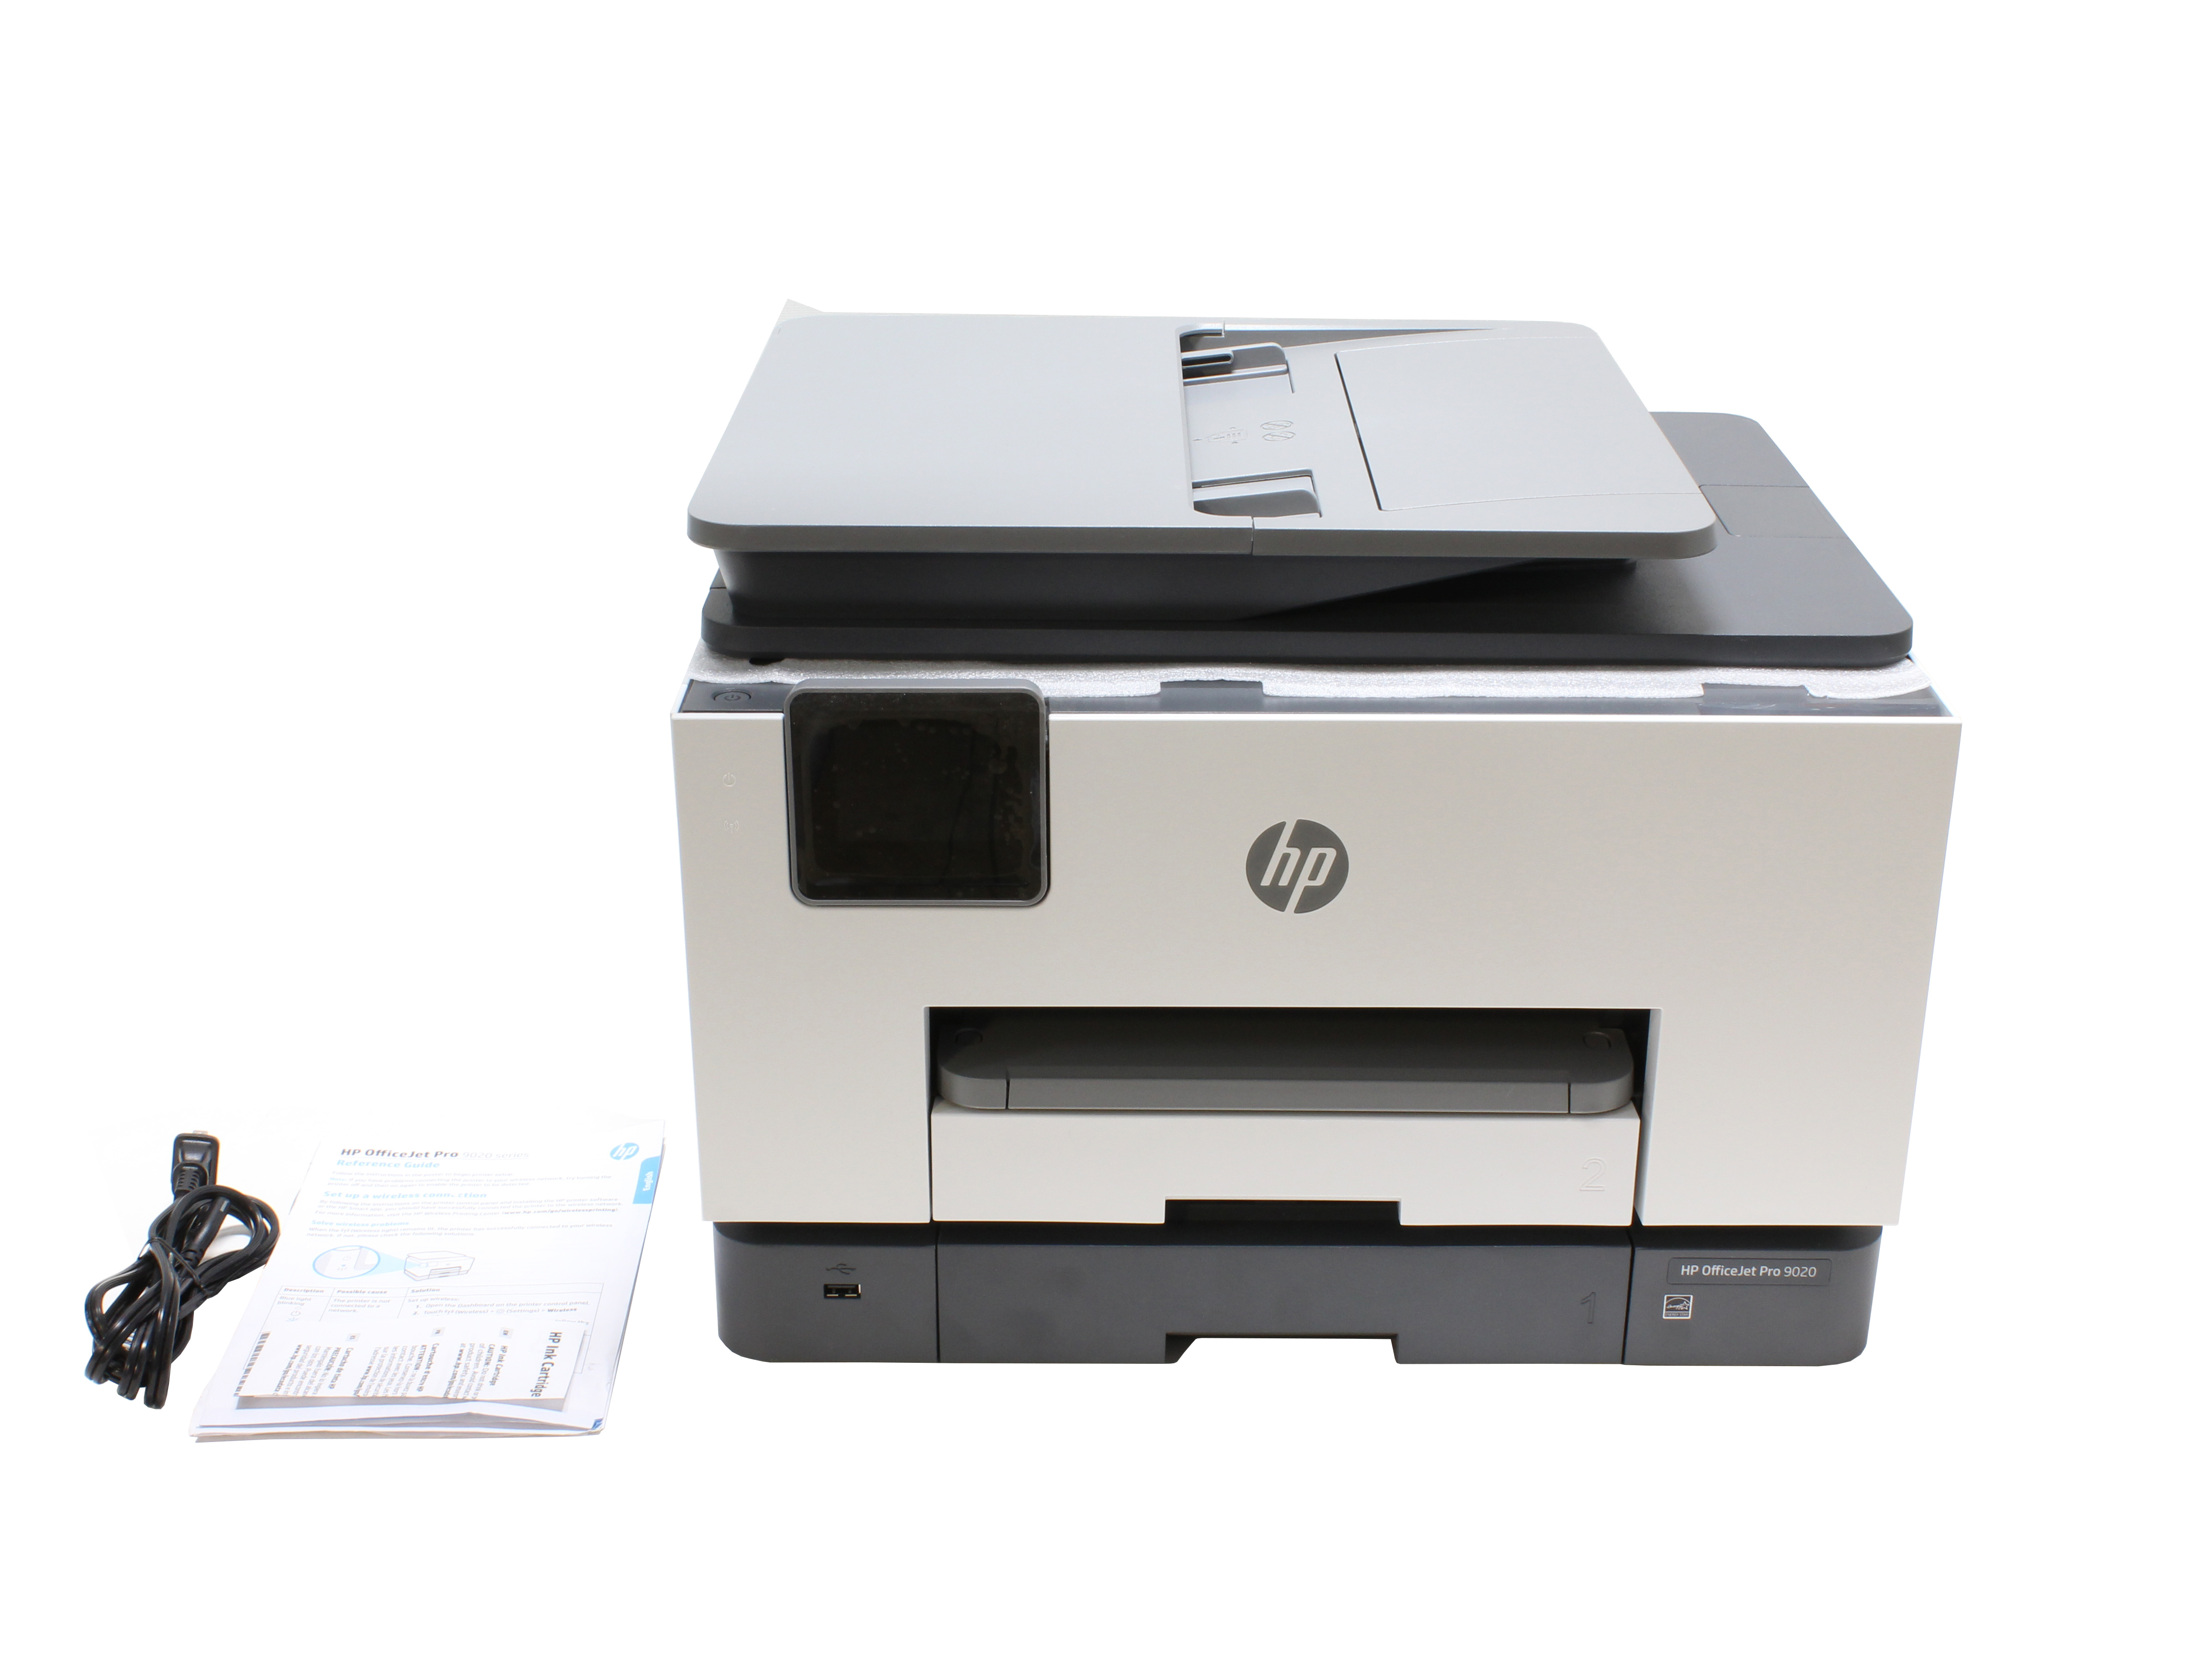 HP Officejet Pro 9020 Wireless Auto-Duplex AIO Color Inkjet Printer 1MR78A#B1H